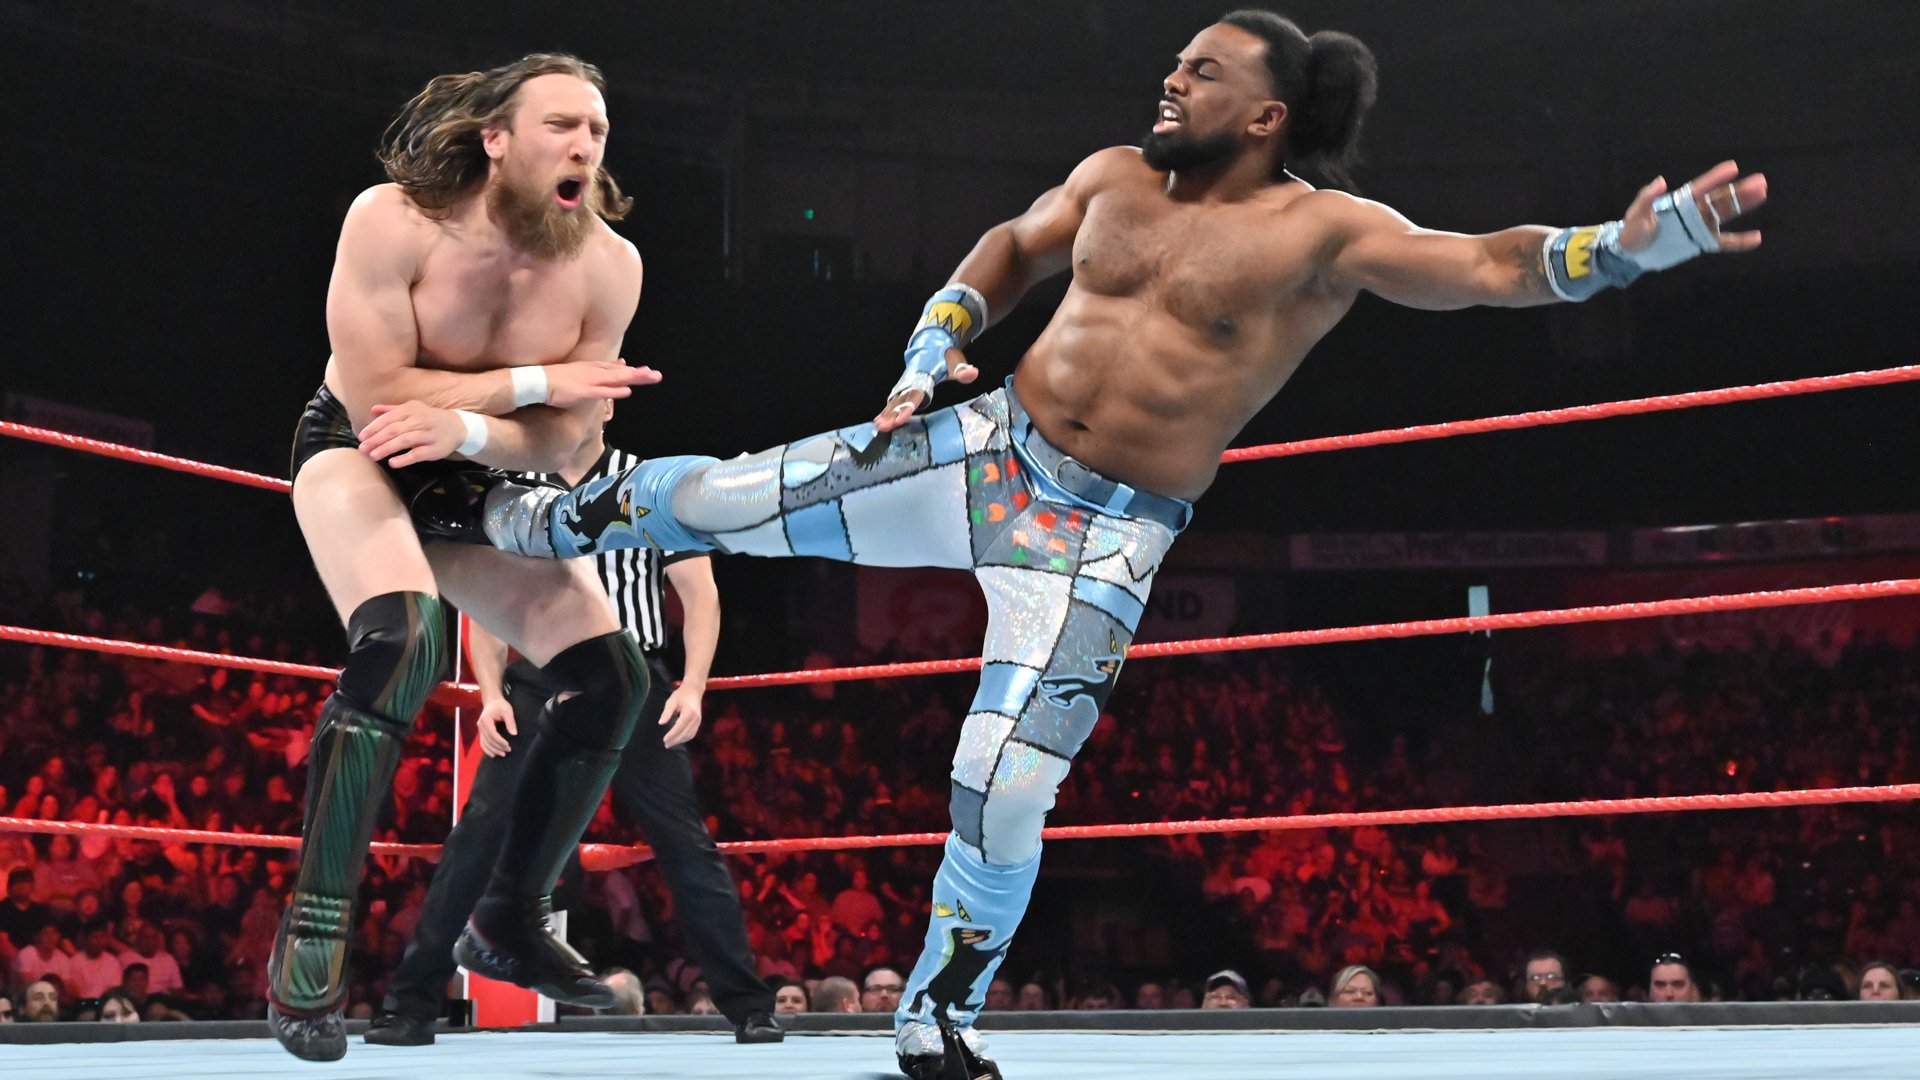 Has Bryan & Rowan’s tag team revolution hit a roadblock?